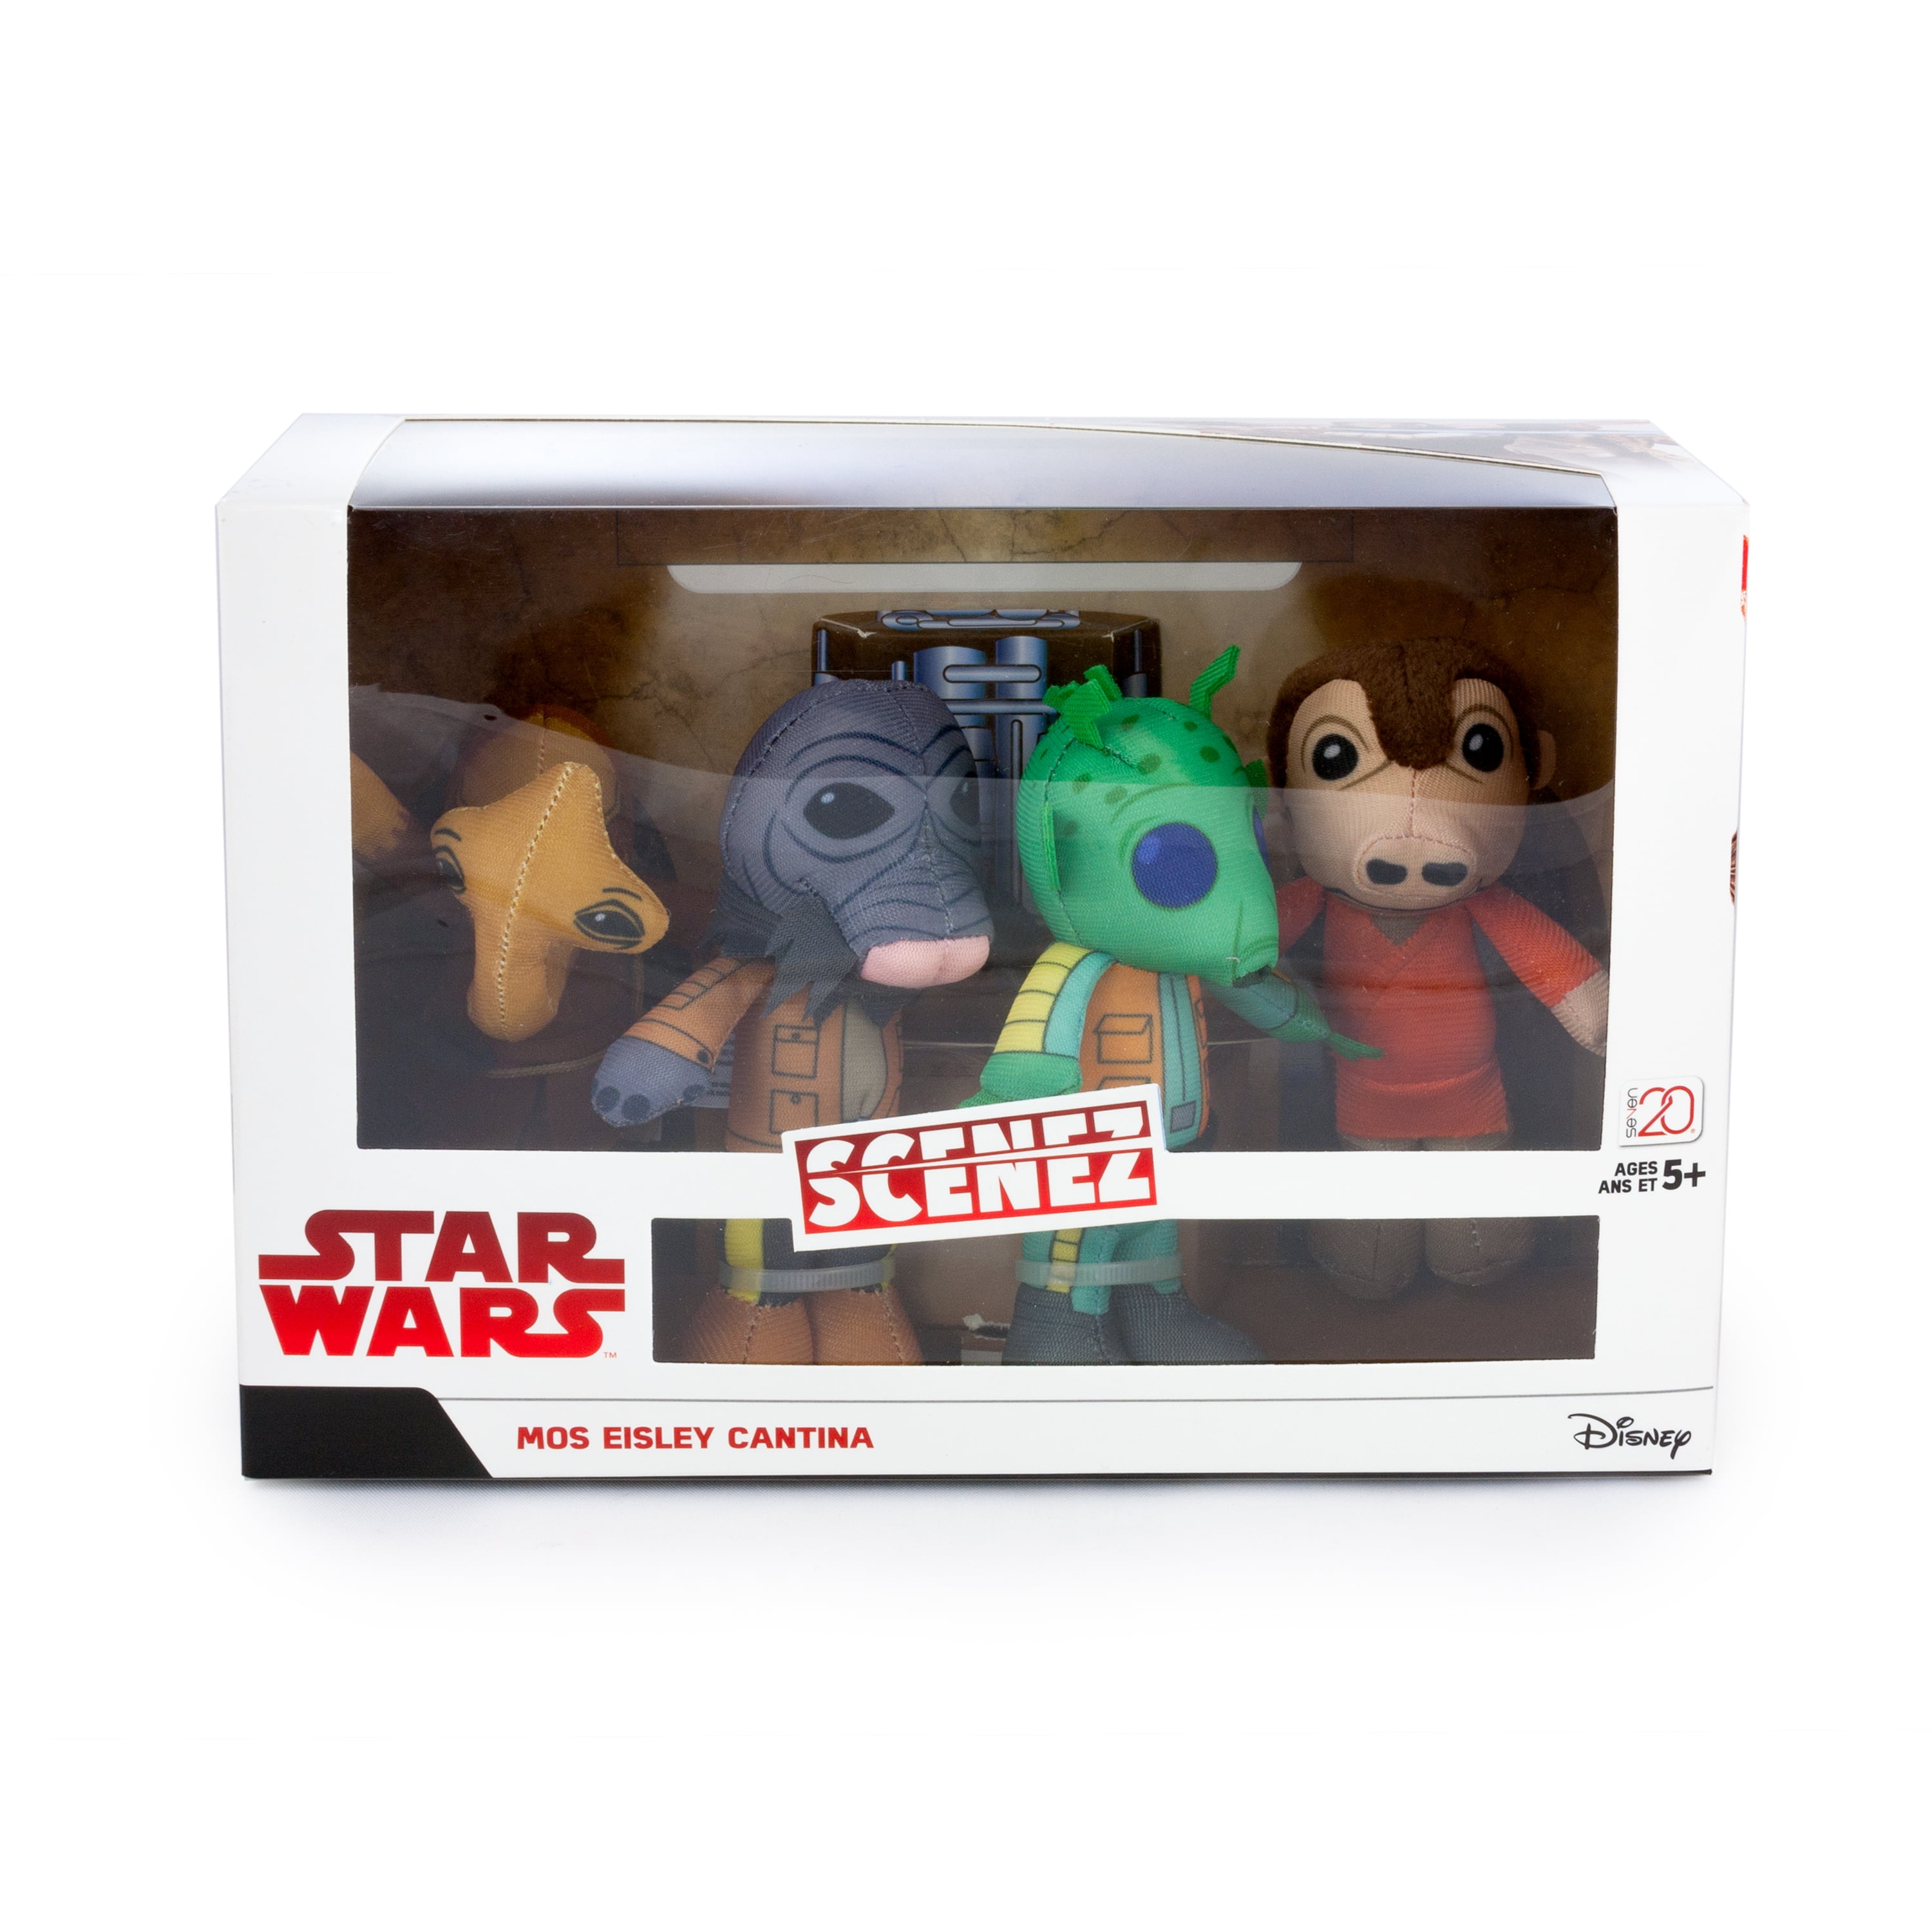 4 figures new Disney Star Wars Scenez Mos Eisley Cantina age 5 